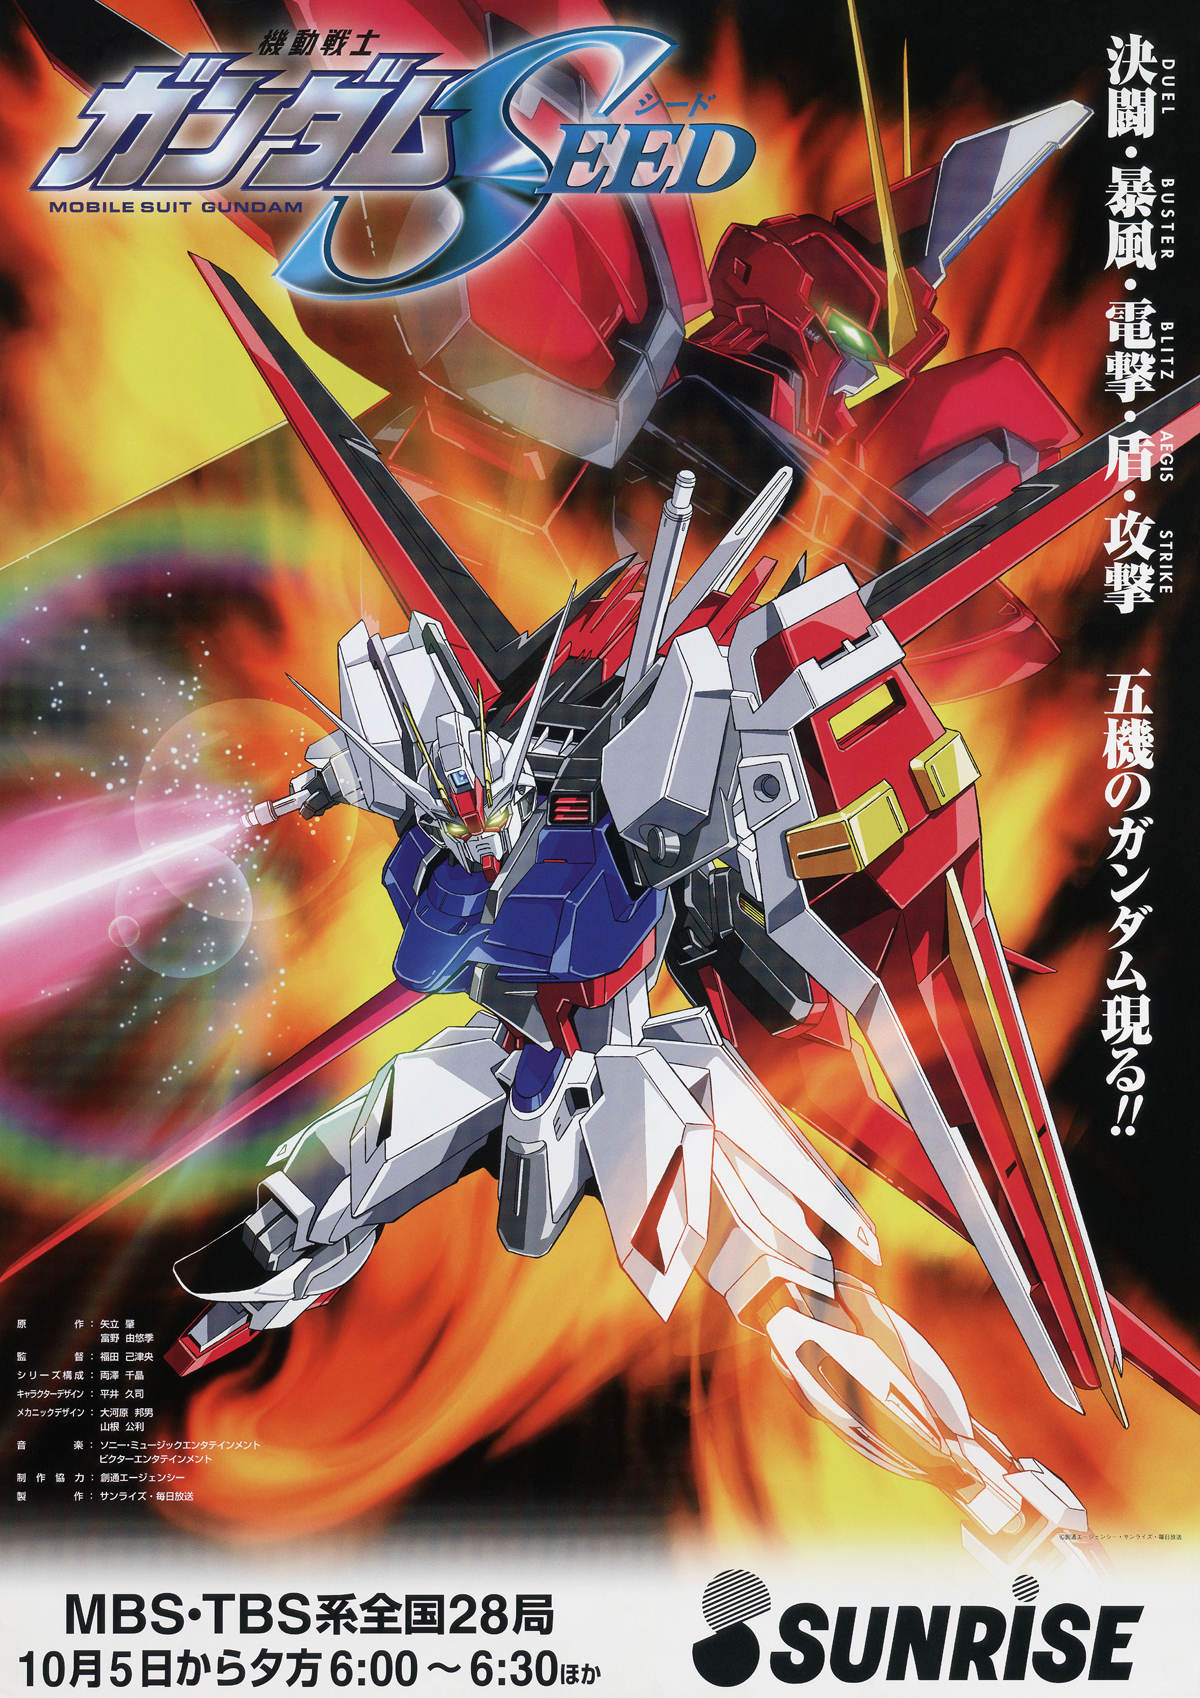 Mobile Suit Gundam SEED affiche crunchyroll